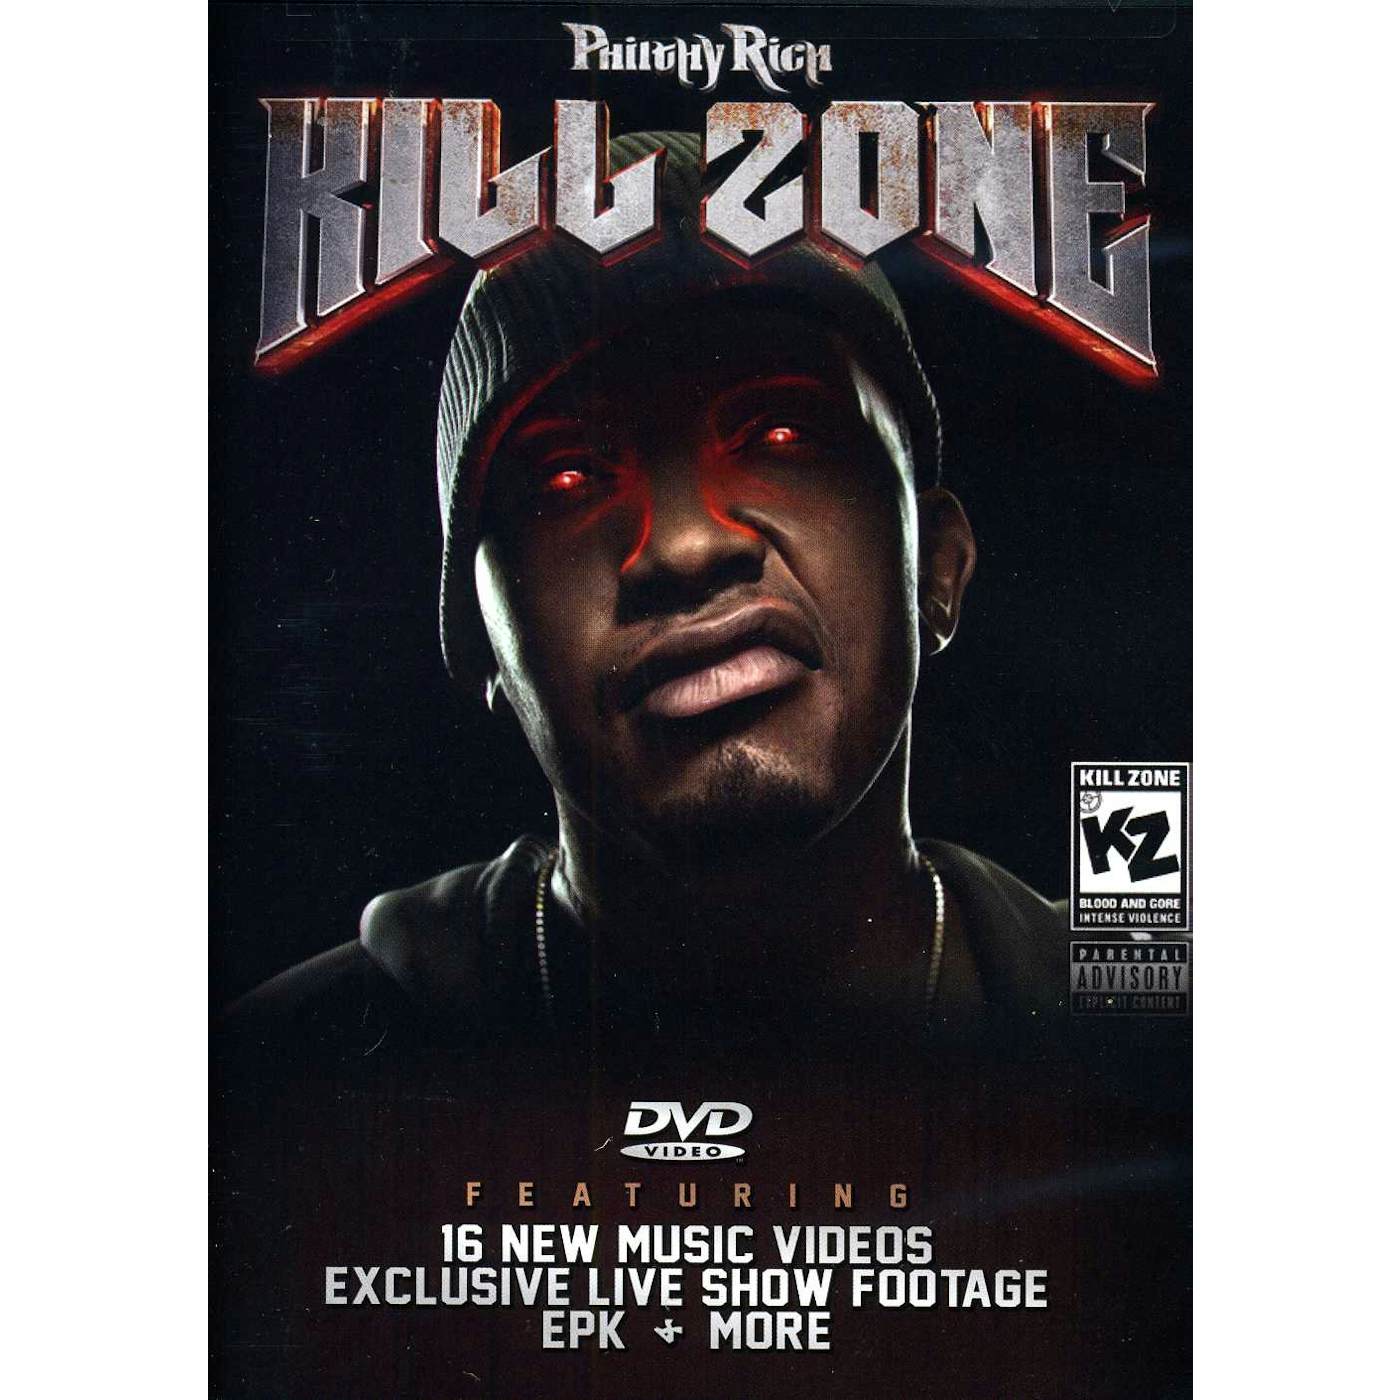 Philthy Rich KILL ZONE DVD